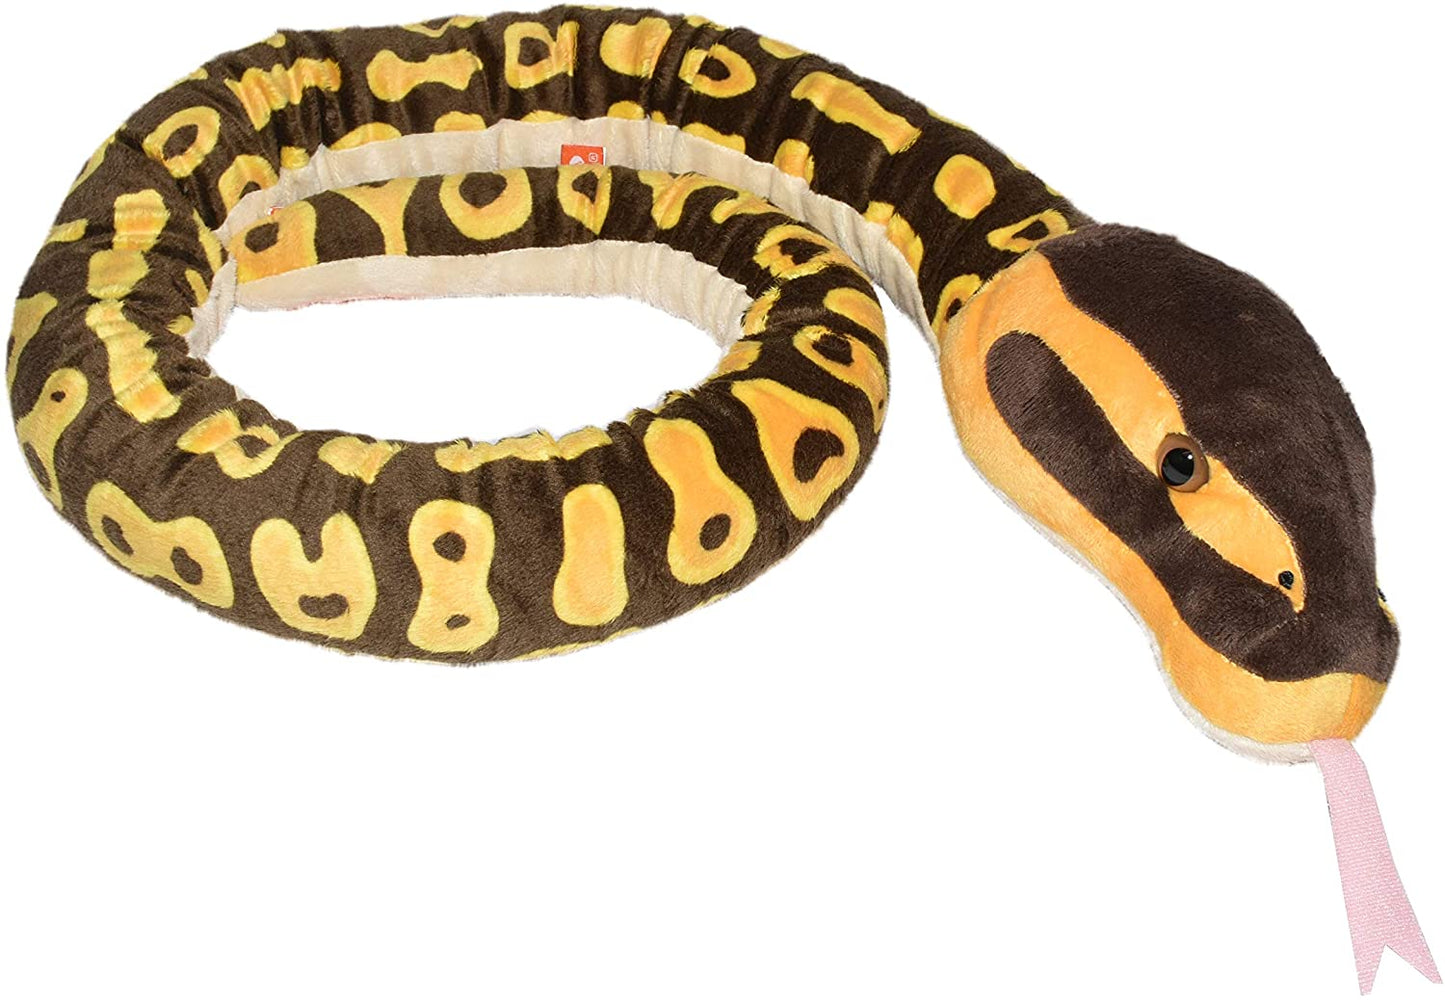 Wild Republic Snakes, Snake Plush, Stuffed Animal, Plush Toy, Gifts for Kids, Ball Python, 54"